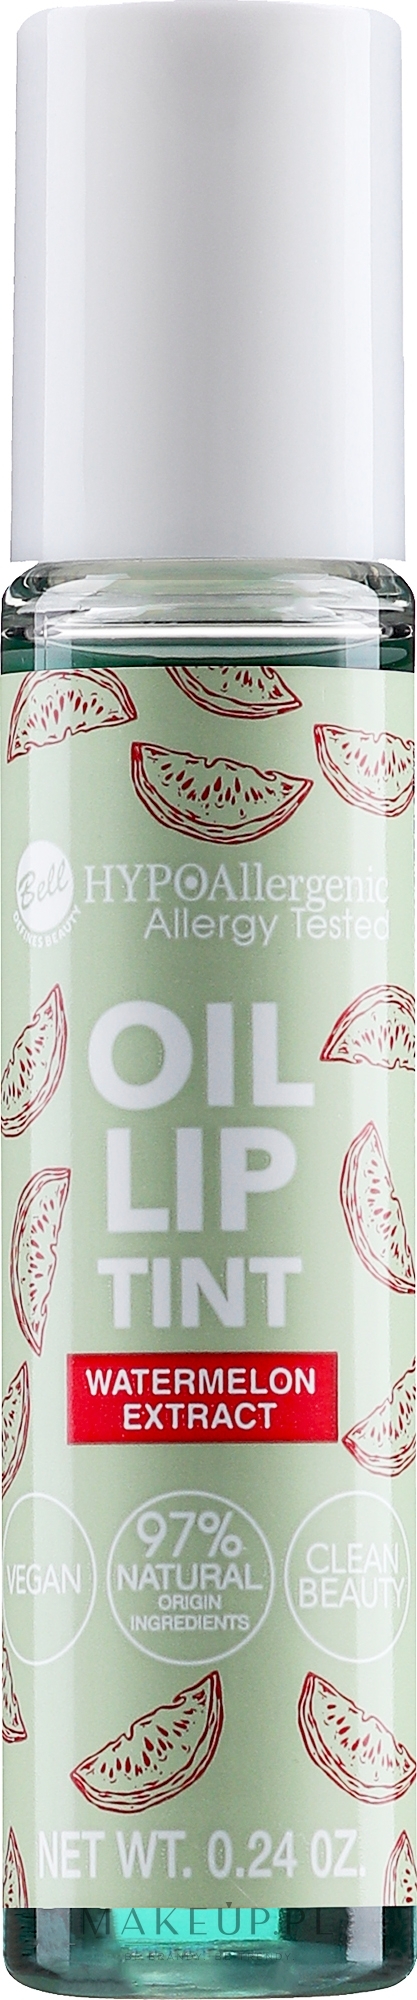 Hipoalergiczny olejek do ust - Bell Hypoallergenic Oil Lip Tint Watermelon Extract — Zdjęcie 7 g